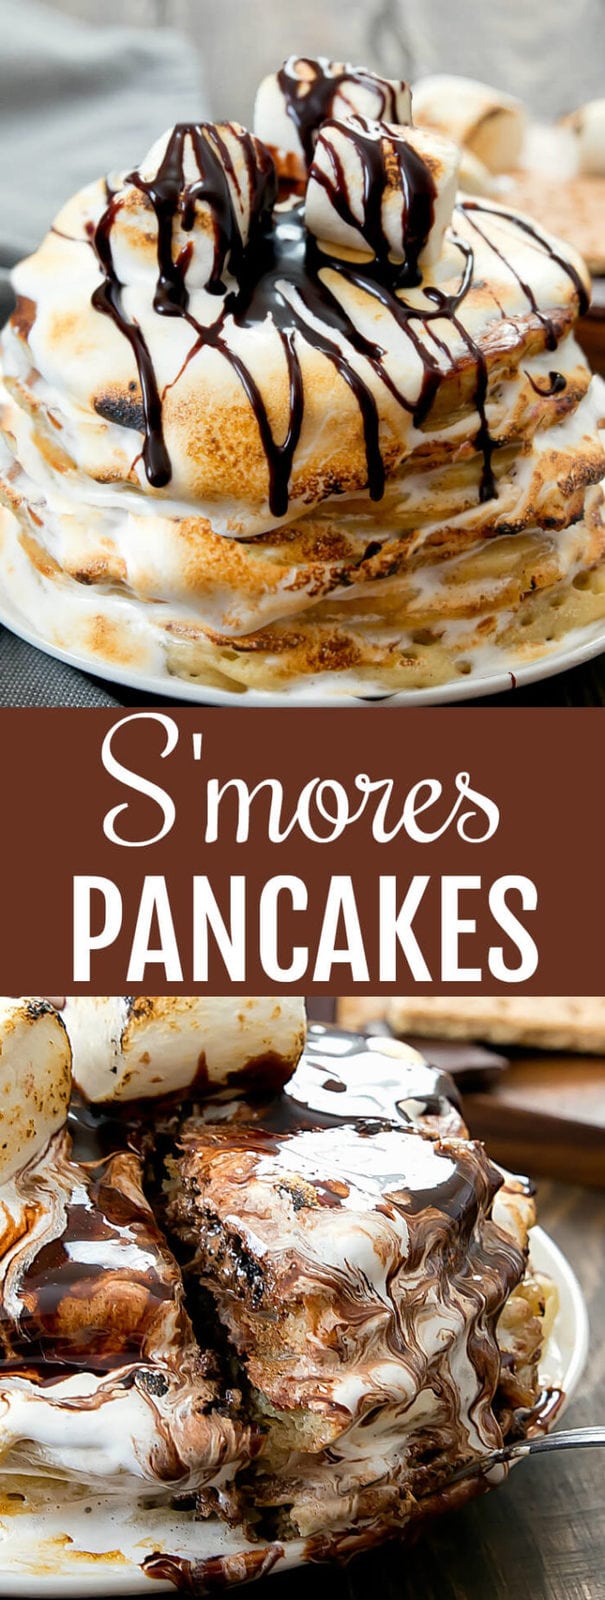 S'mores Pancakes